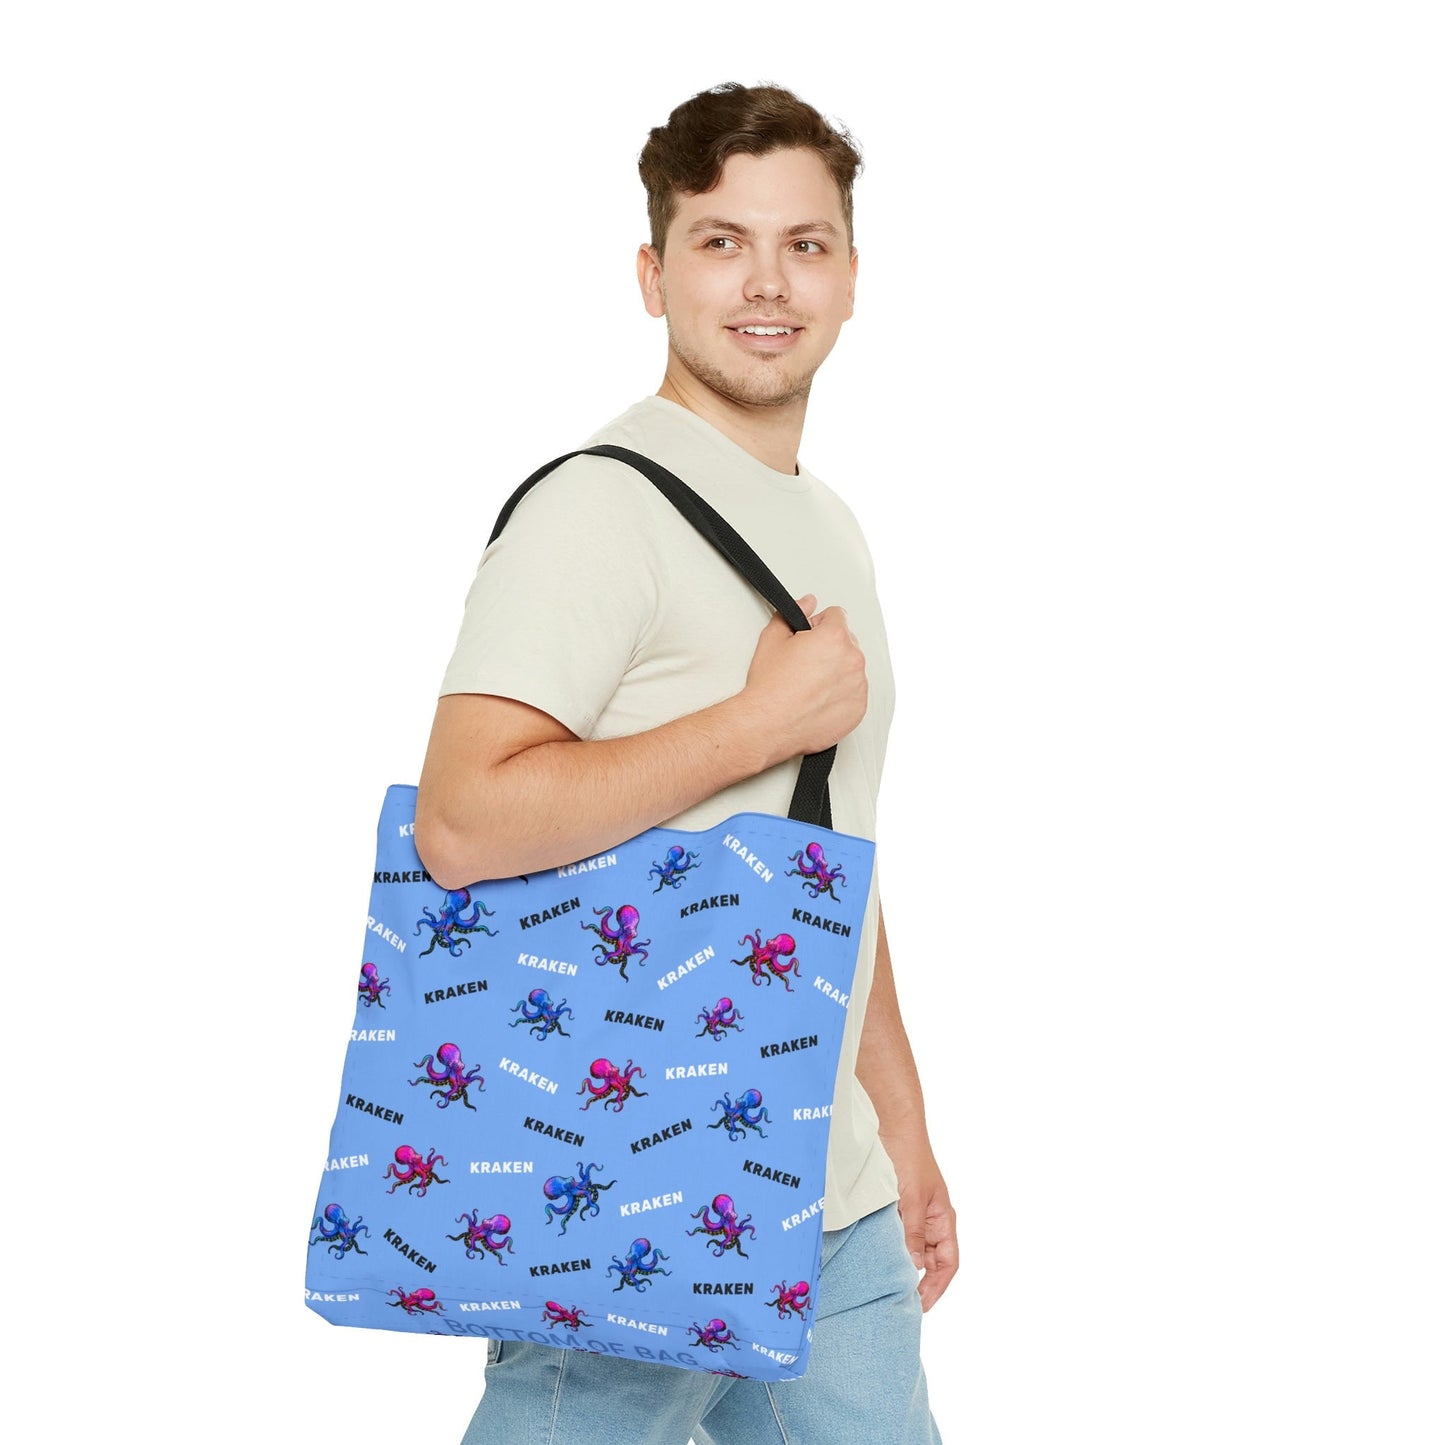 Kraken Pattern Bag - Reef of Clowns